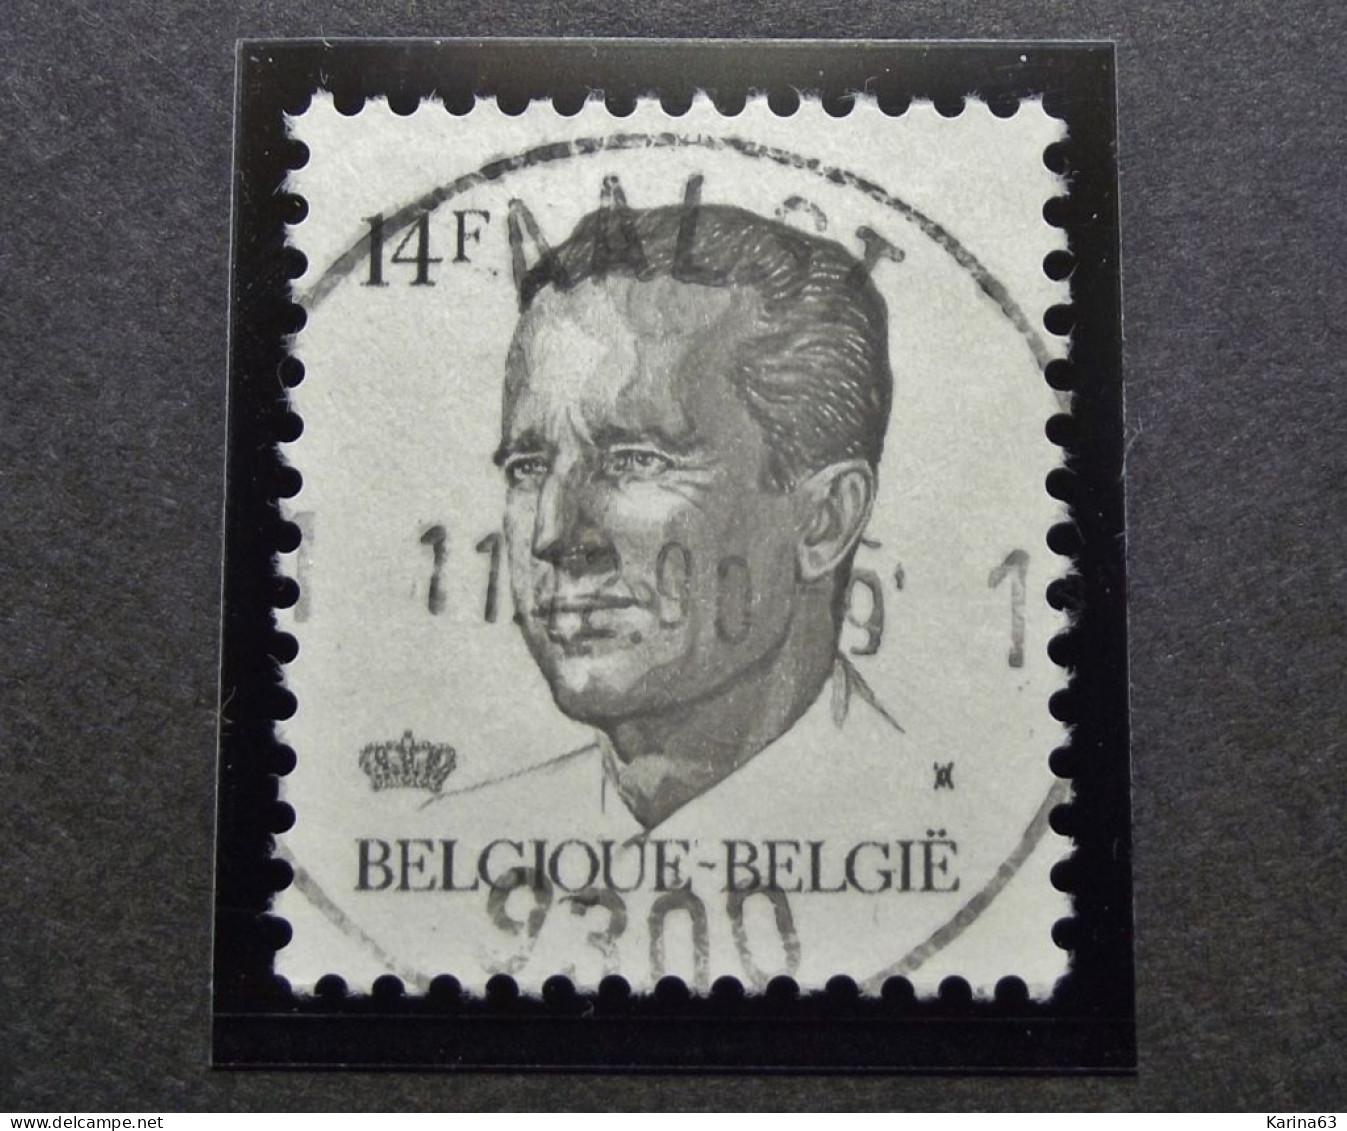 Belgie Belgique - 1990 -  OPB/COB  N° 2352 - 14 F  - Obl.  - AALST - 1990 - Oblitérés